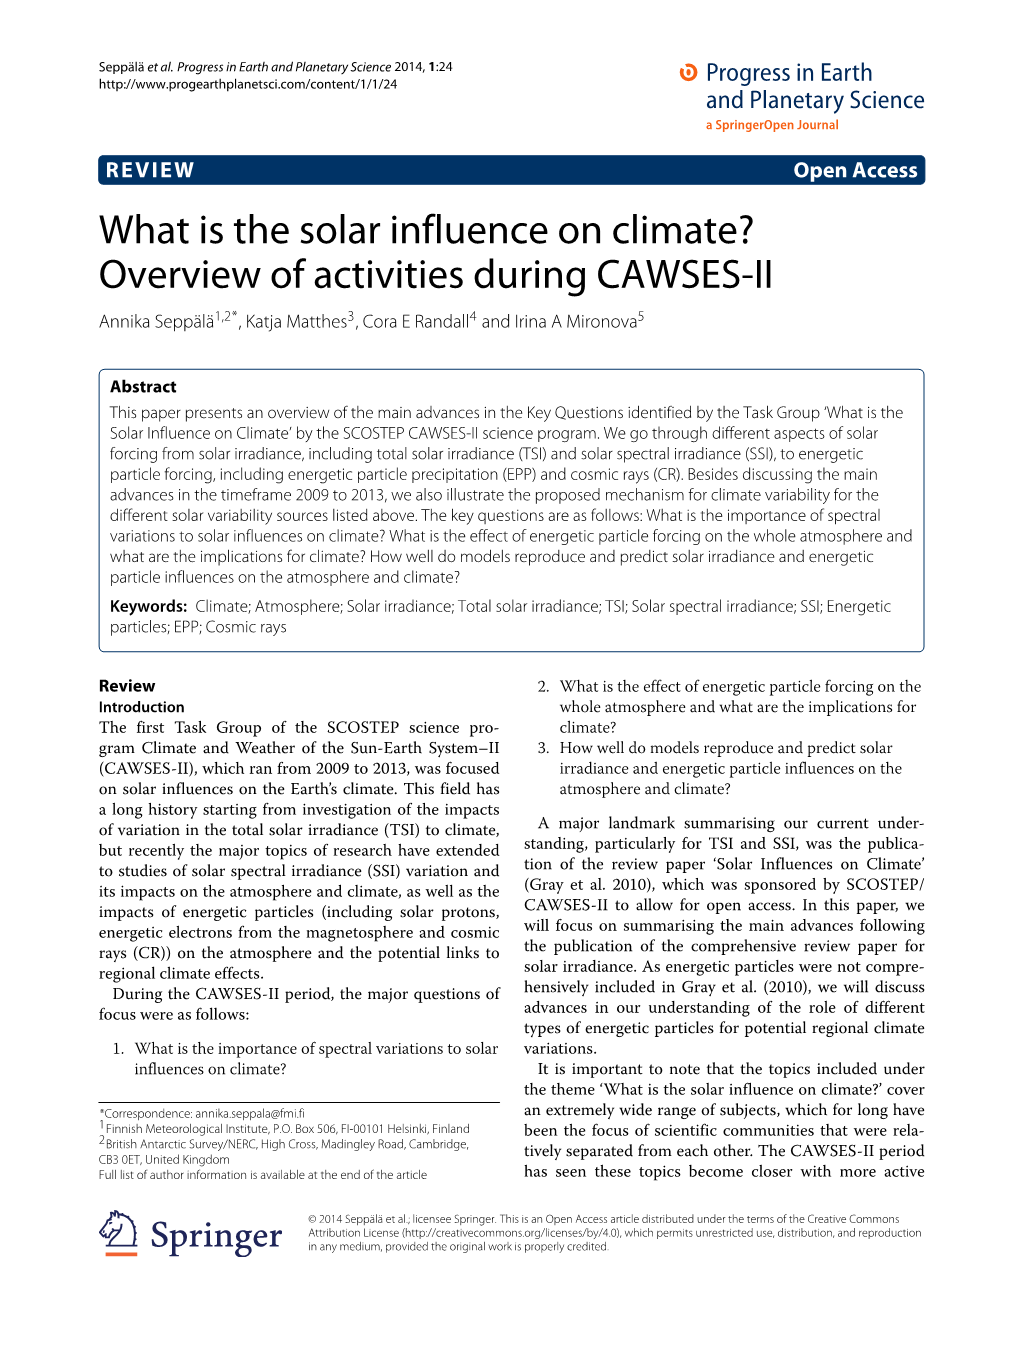 What Is the Solar Influence on Climate? Overview of Activities During CAWSES-II Annika Seppälä1,2*, Katja Matthes3, Cora E Randall4 Andirinaamironova5